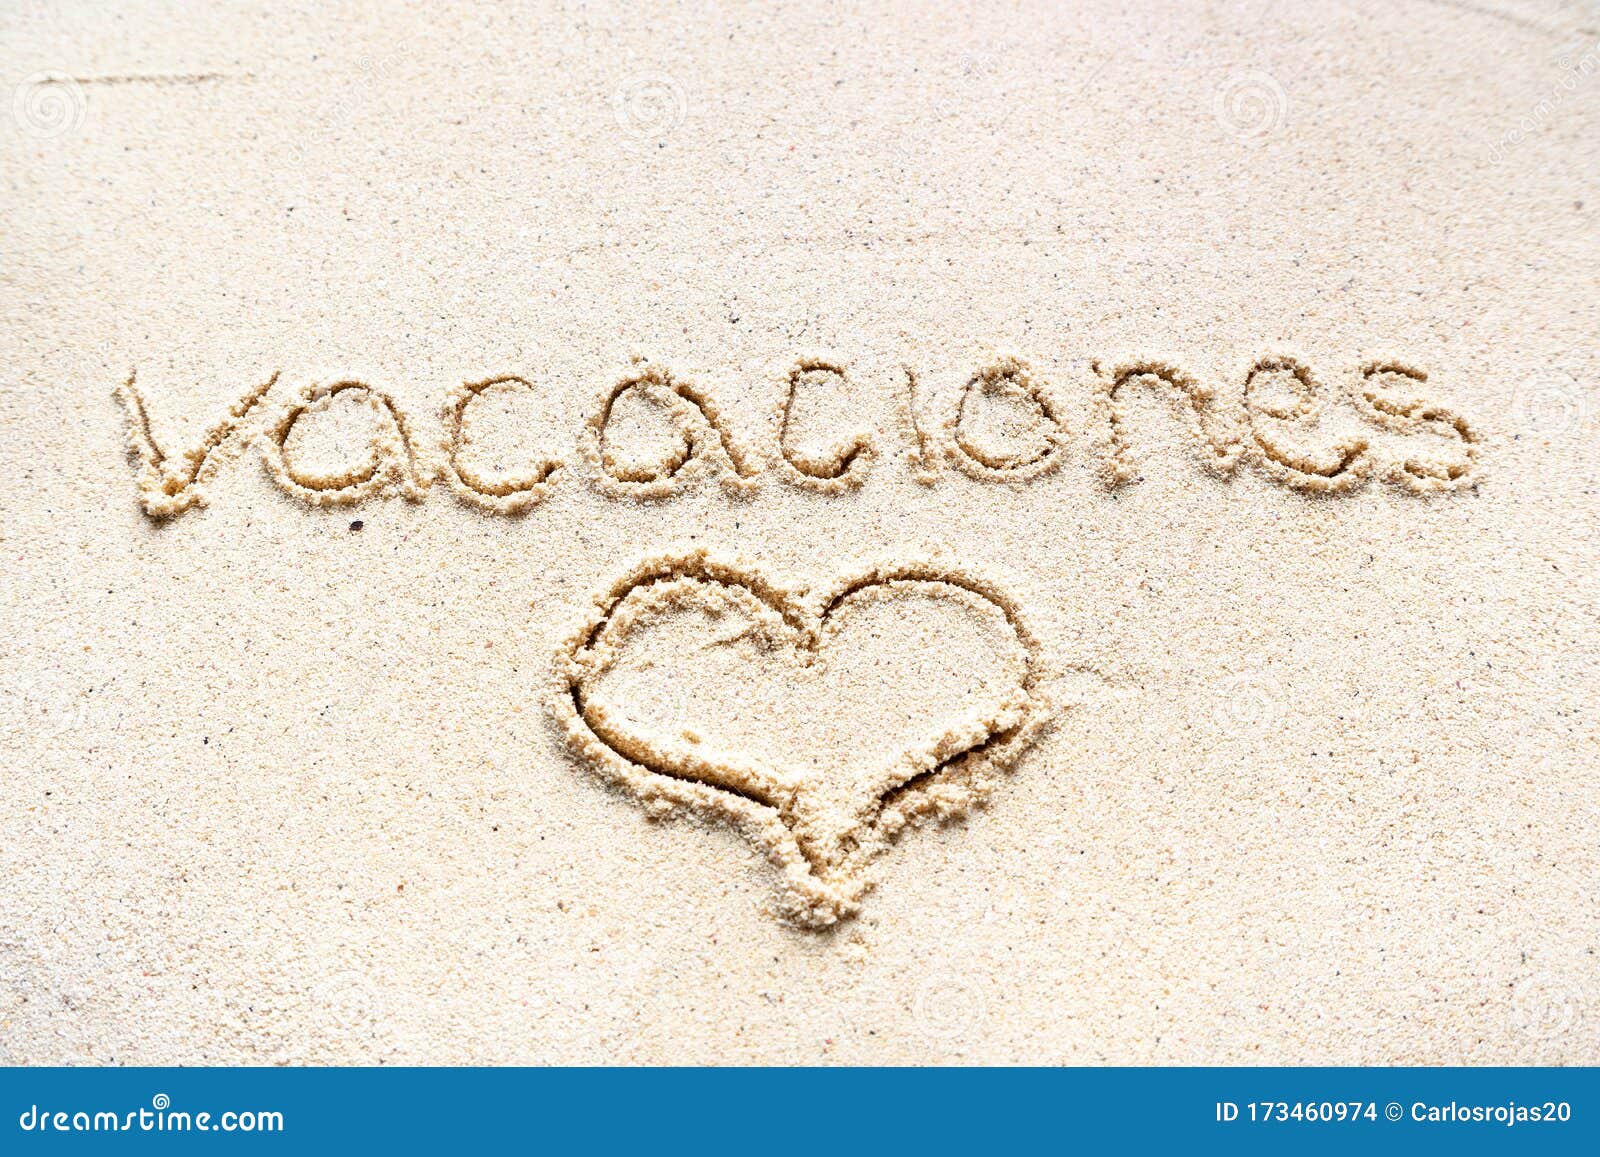 handwriting words `vacaciones` in spanish